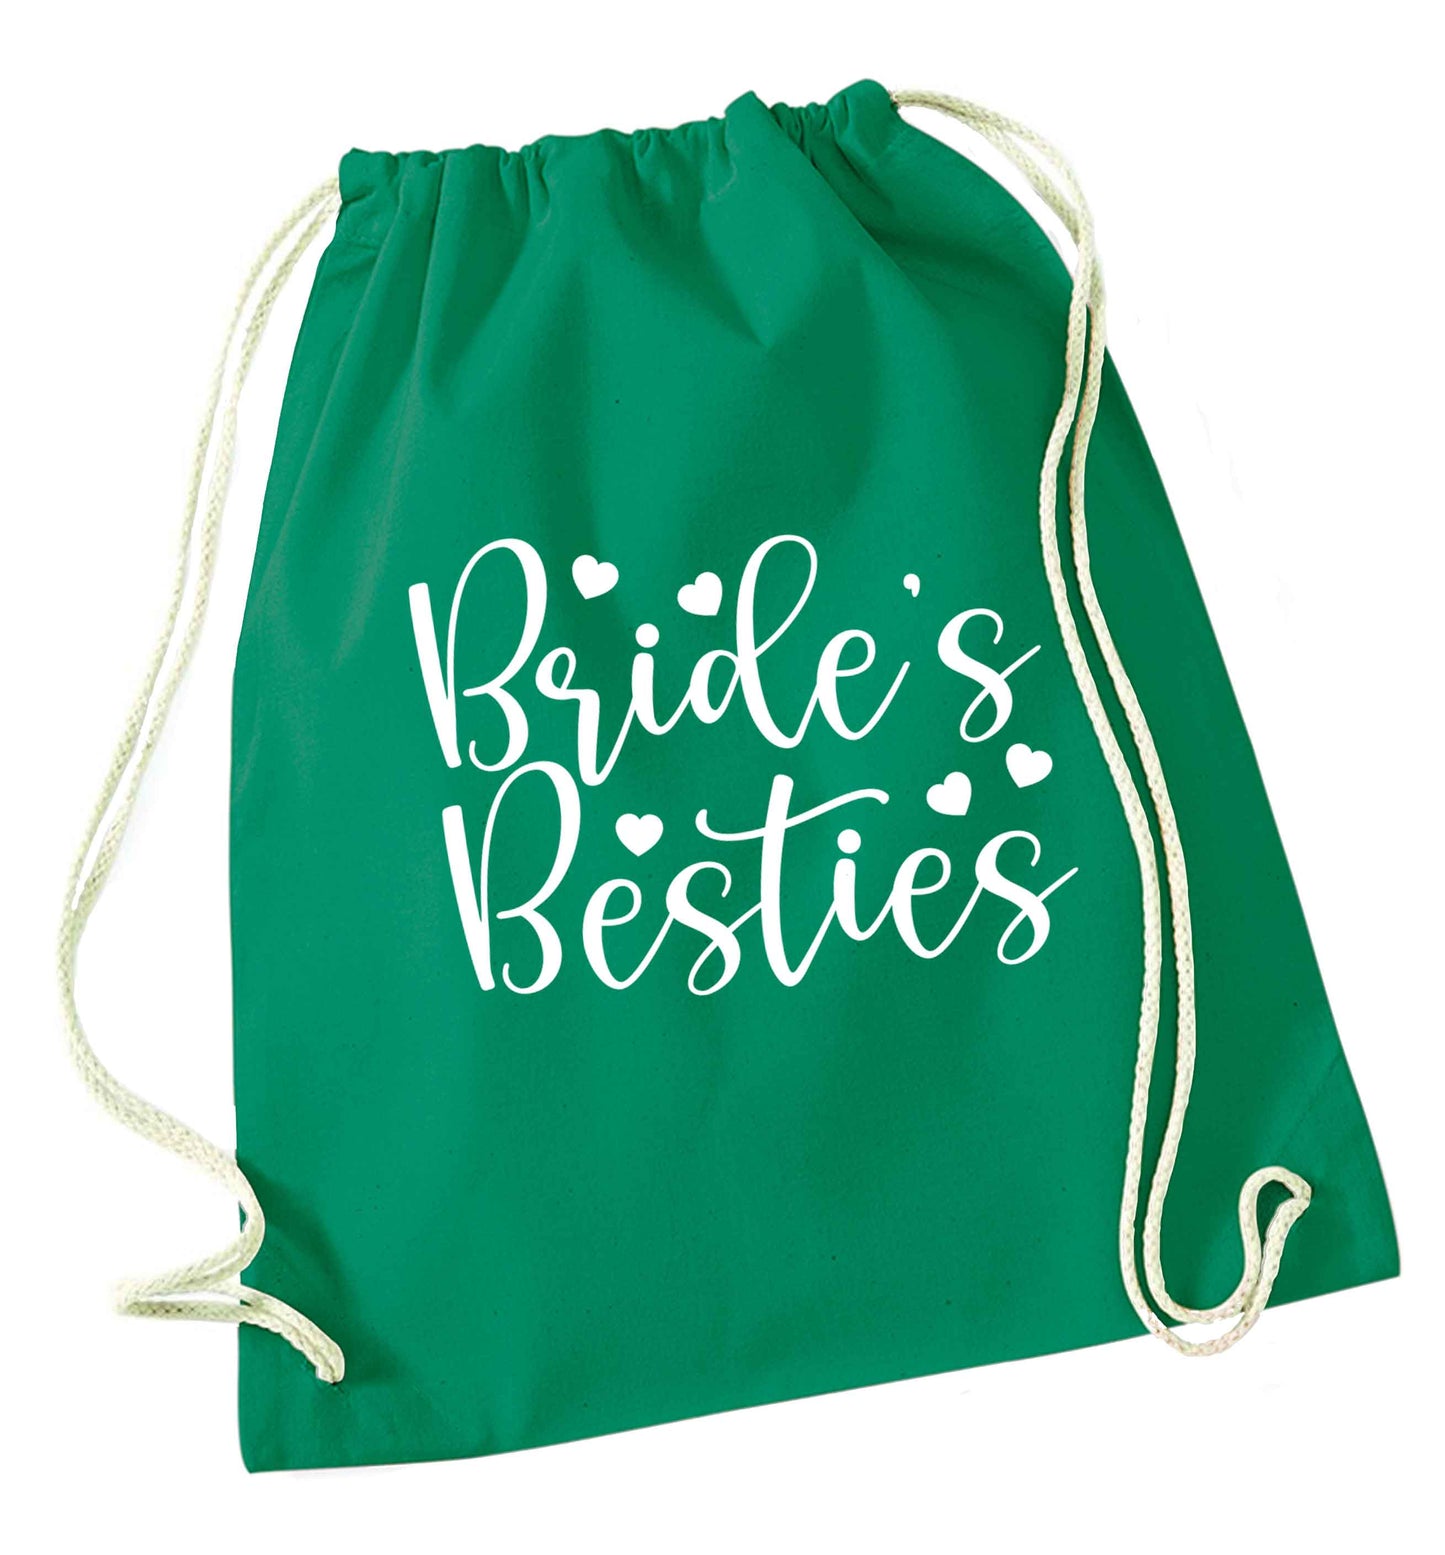 Brides besties green drawstring bag